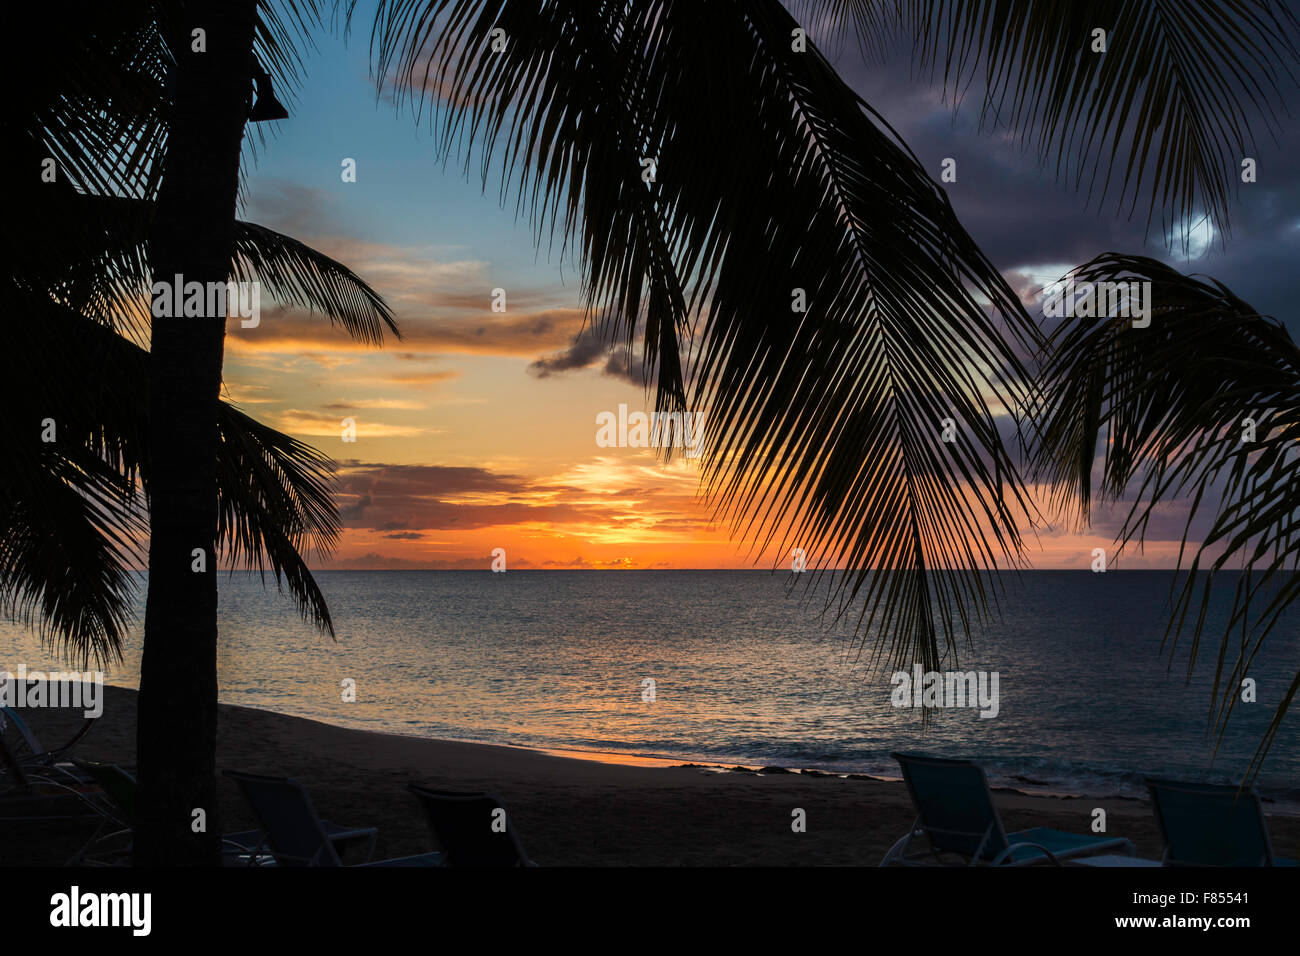 A landscape of the Caribbean sea with palm trees at sundown St. Croix, U.S. Virgin Islands USVI Stock Photo